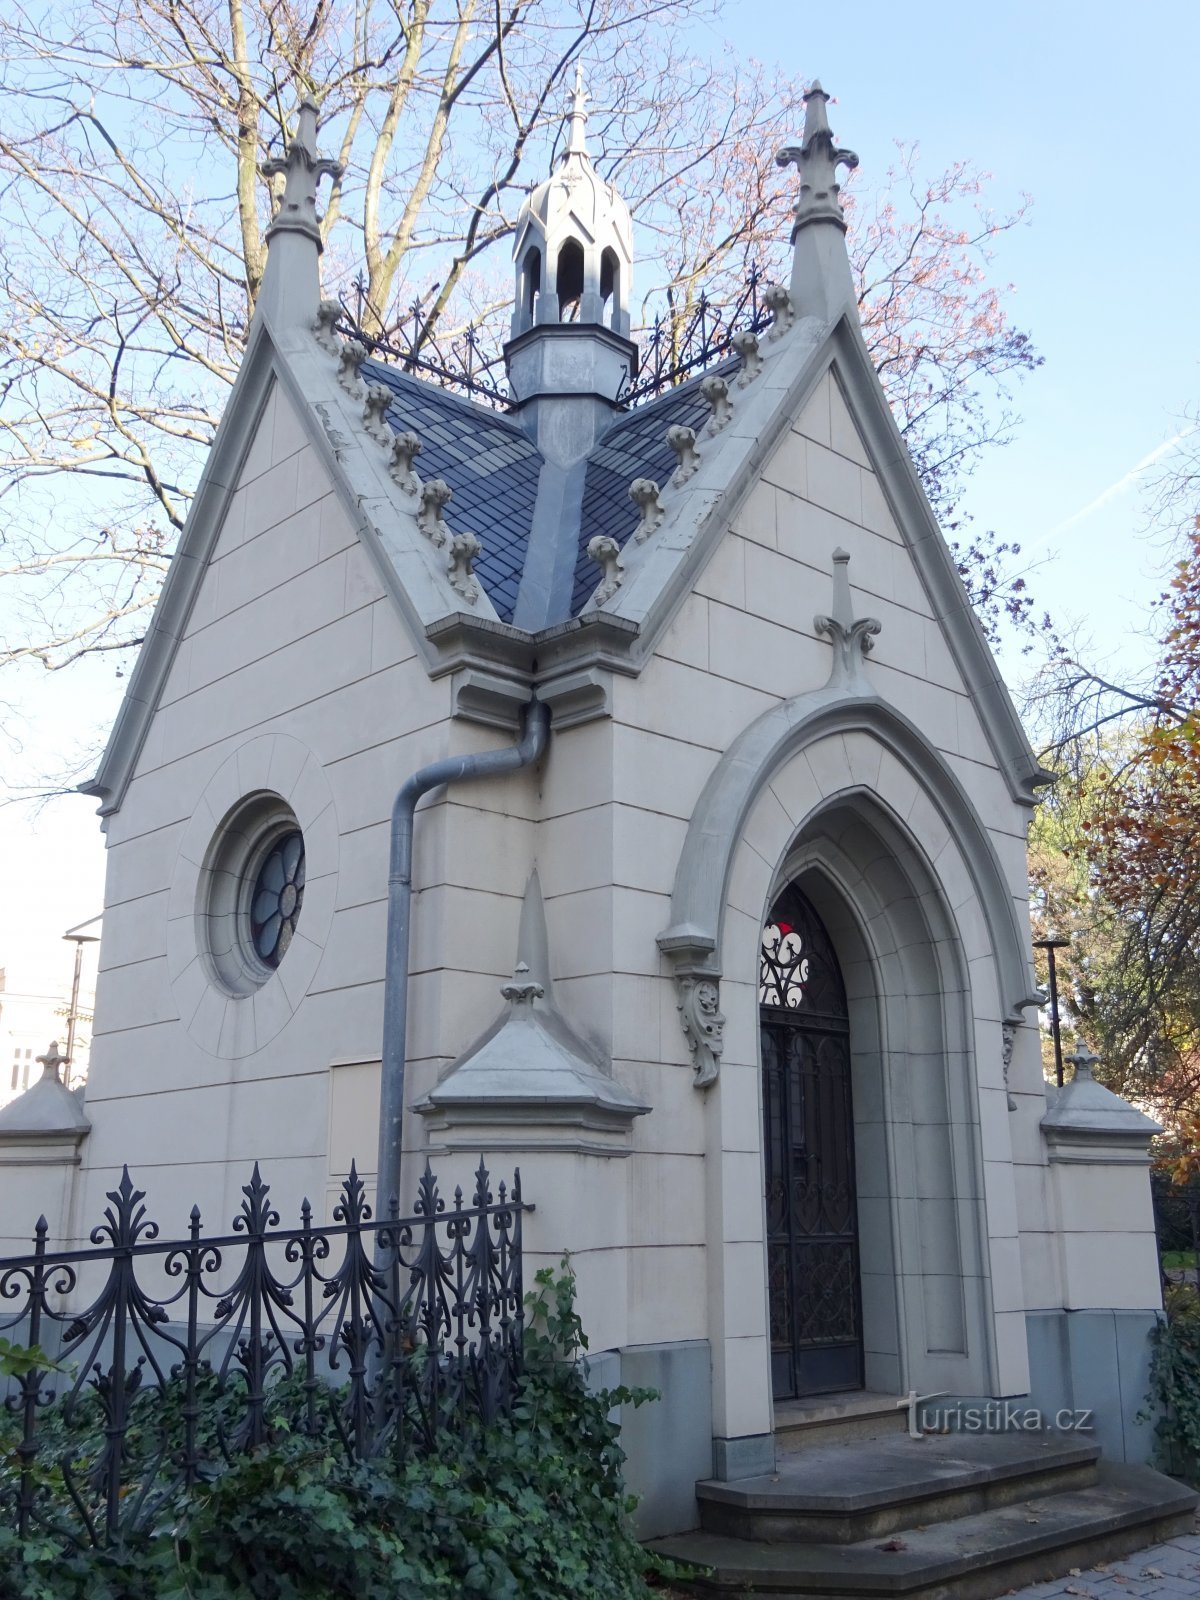 Ostrava - kapela sv. Elizabete na mestu nekdanjega pokopališča